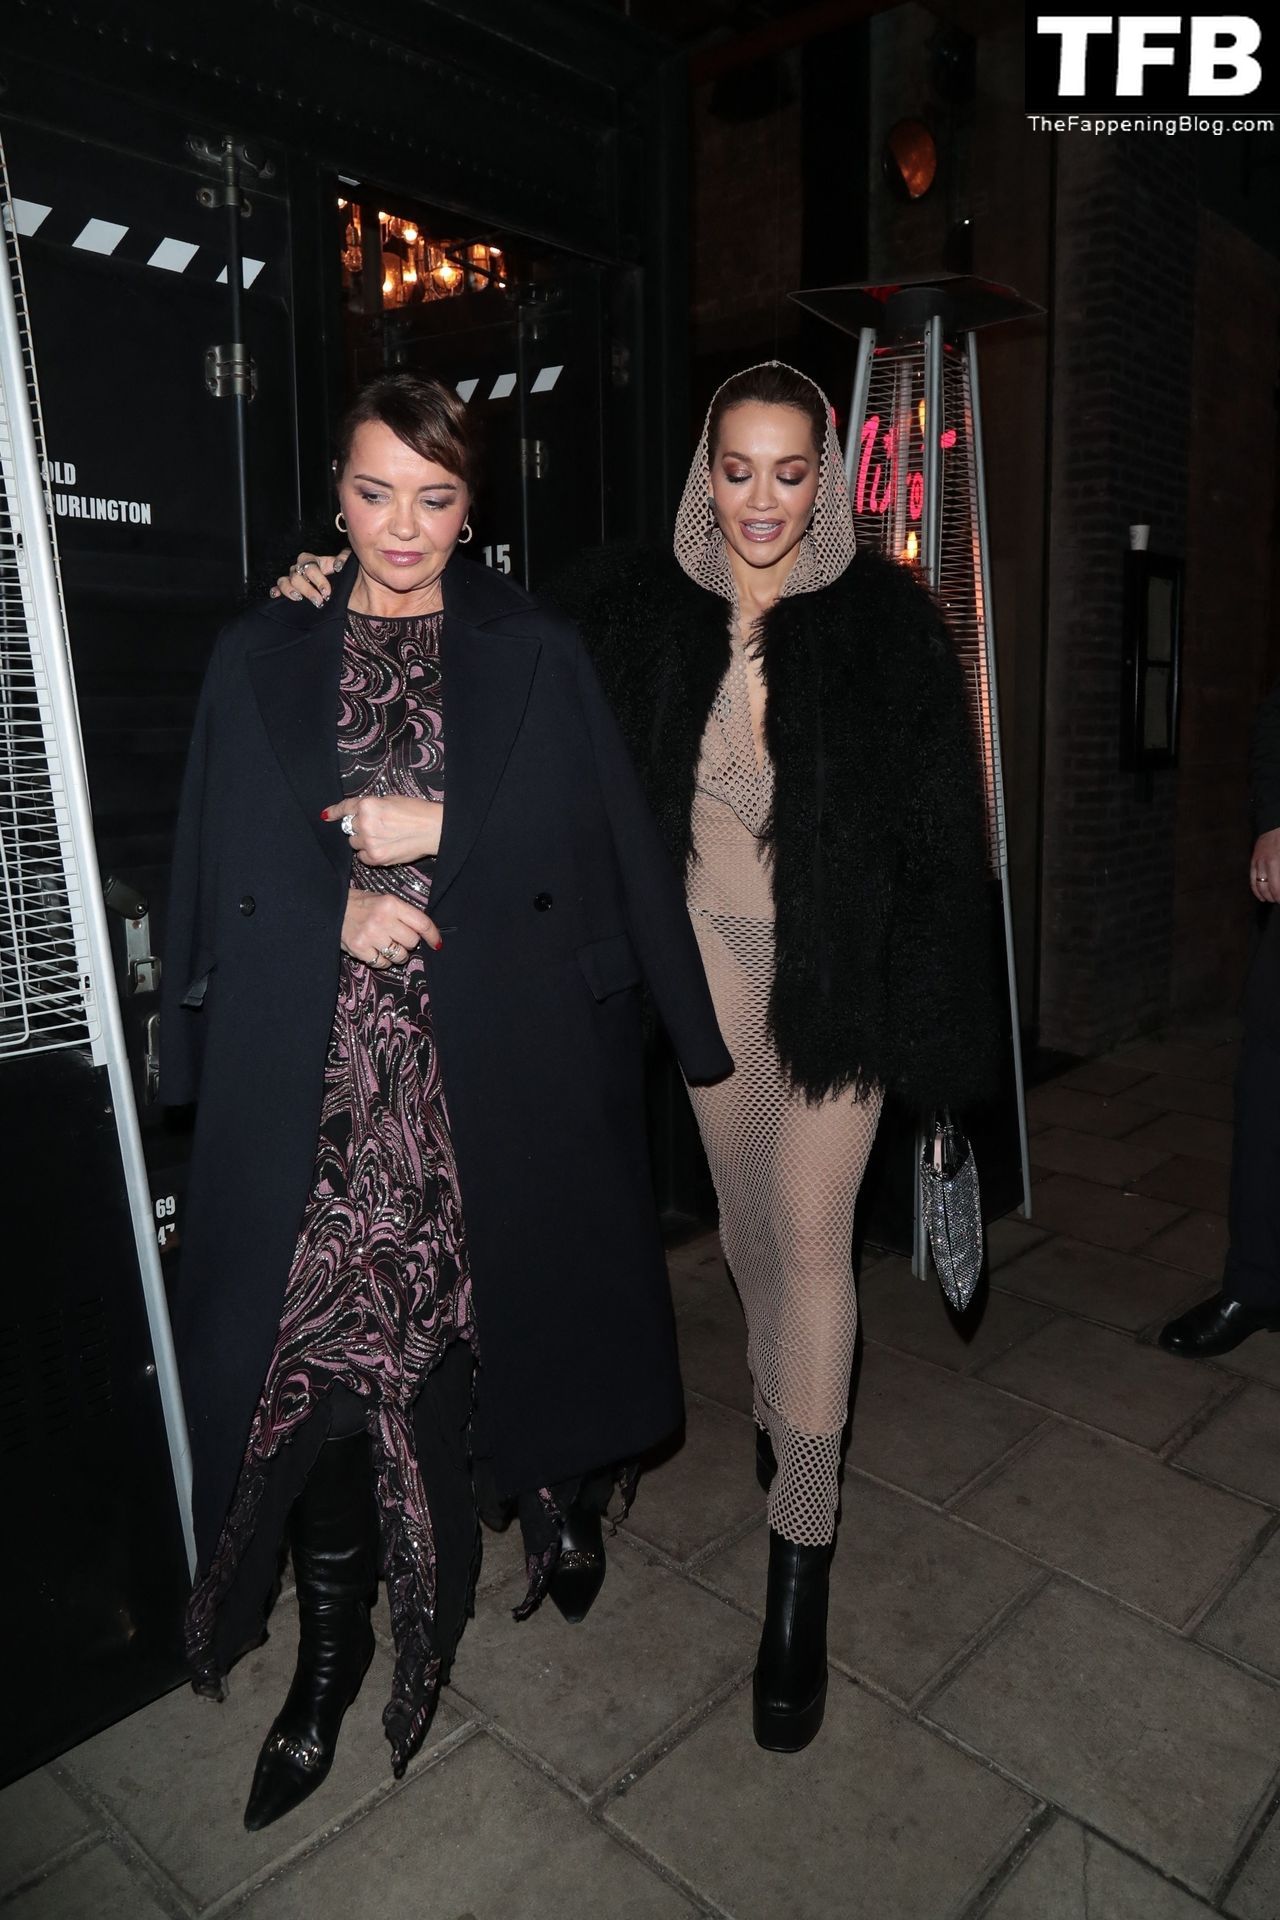 Rita Ora Looks Stunning at Vas J Morgan’s Birthday Party in London (127 New Photos)